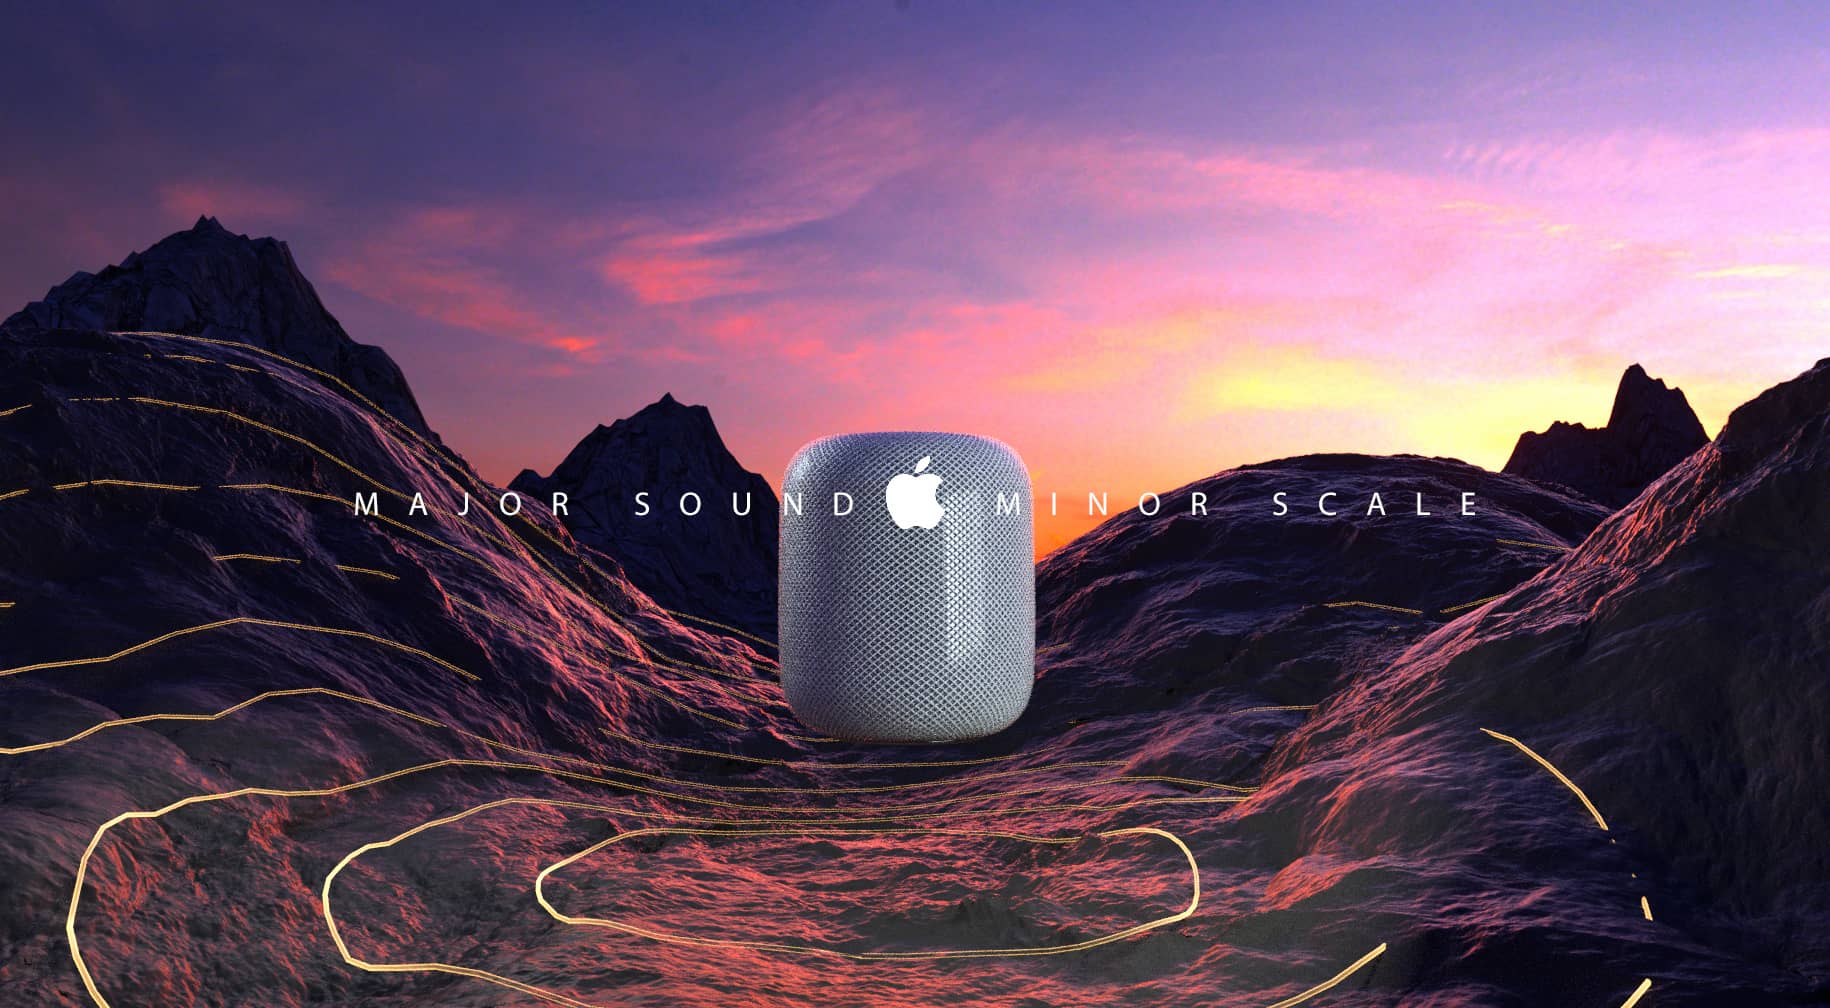 Apple Homepod TVC- Major sound - Minor scale